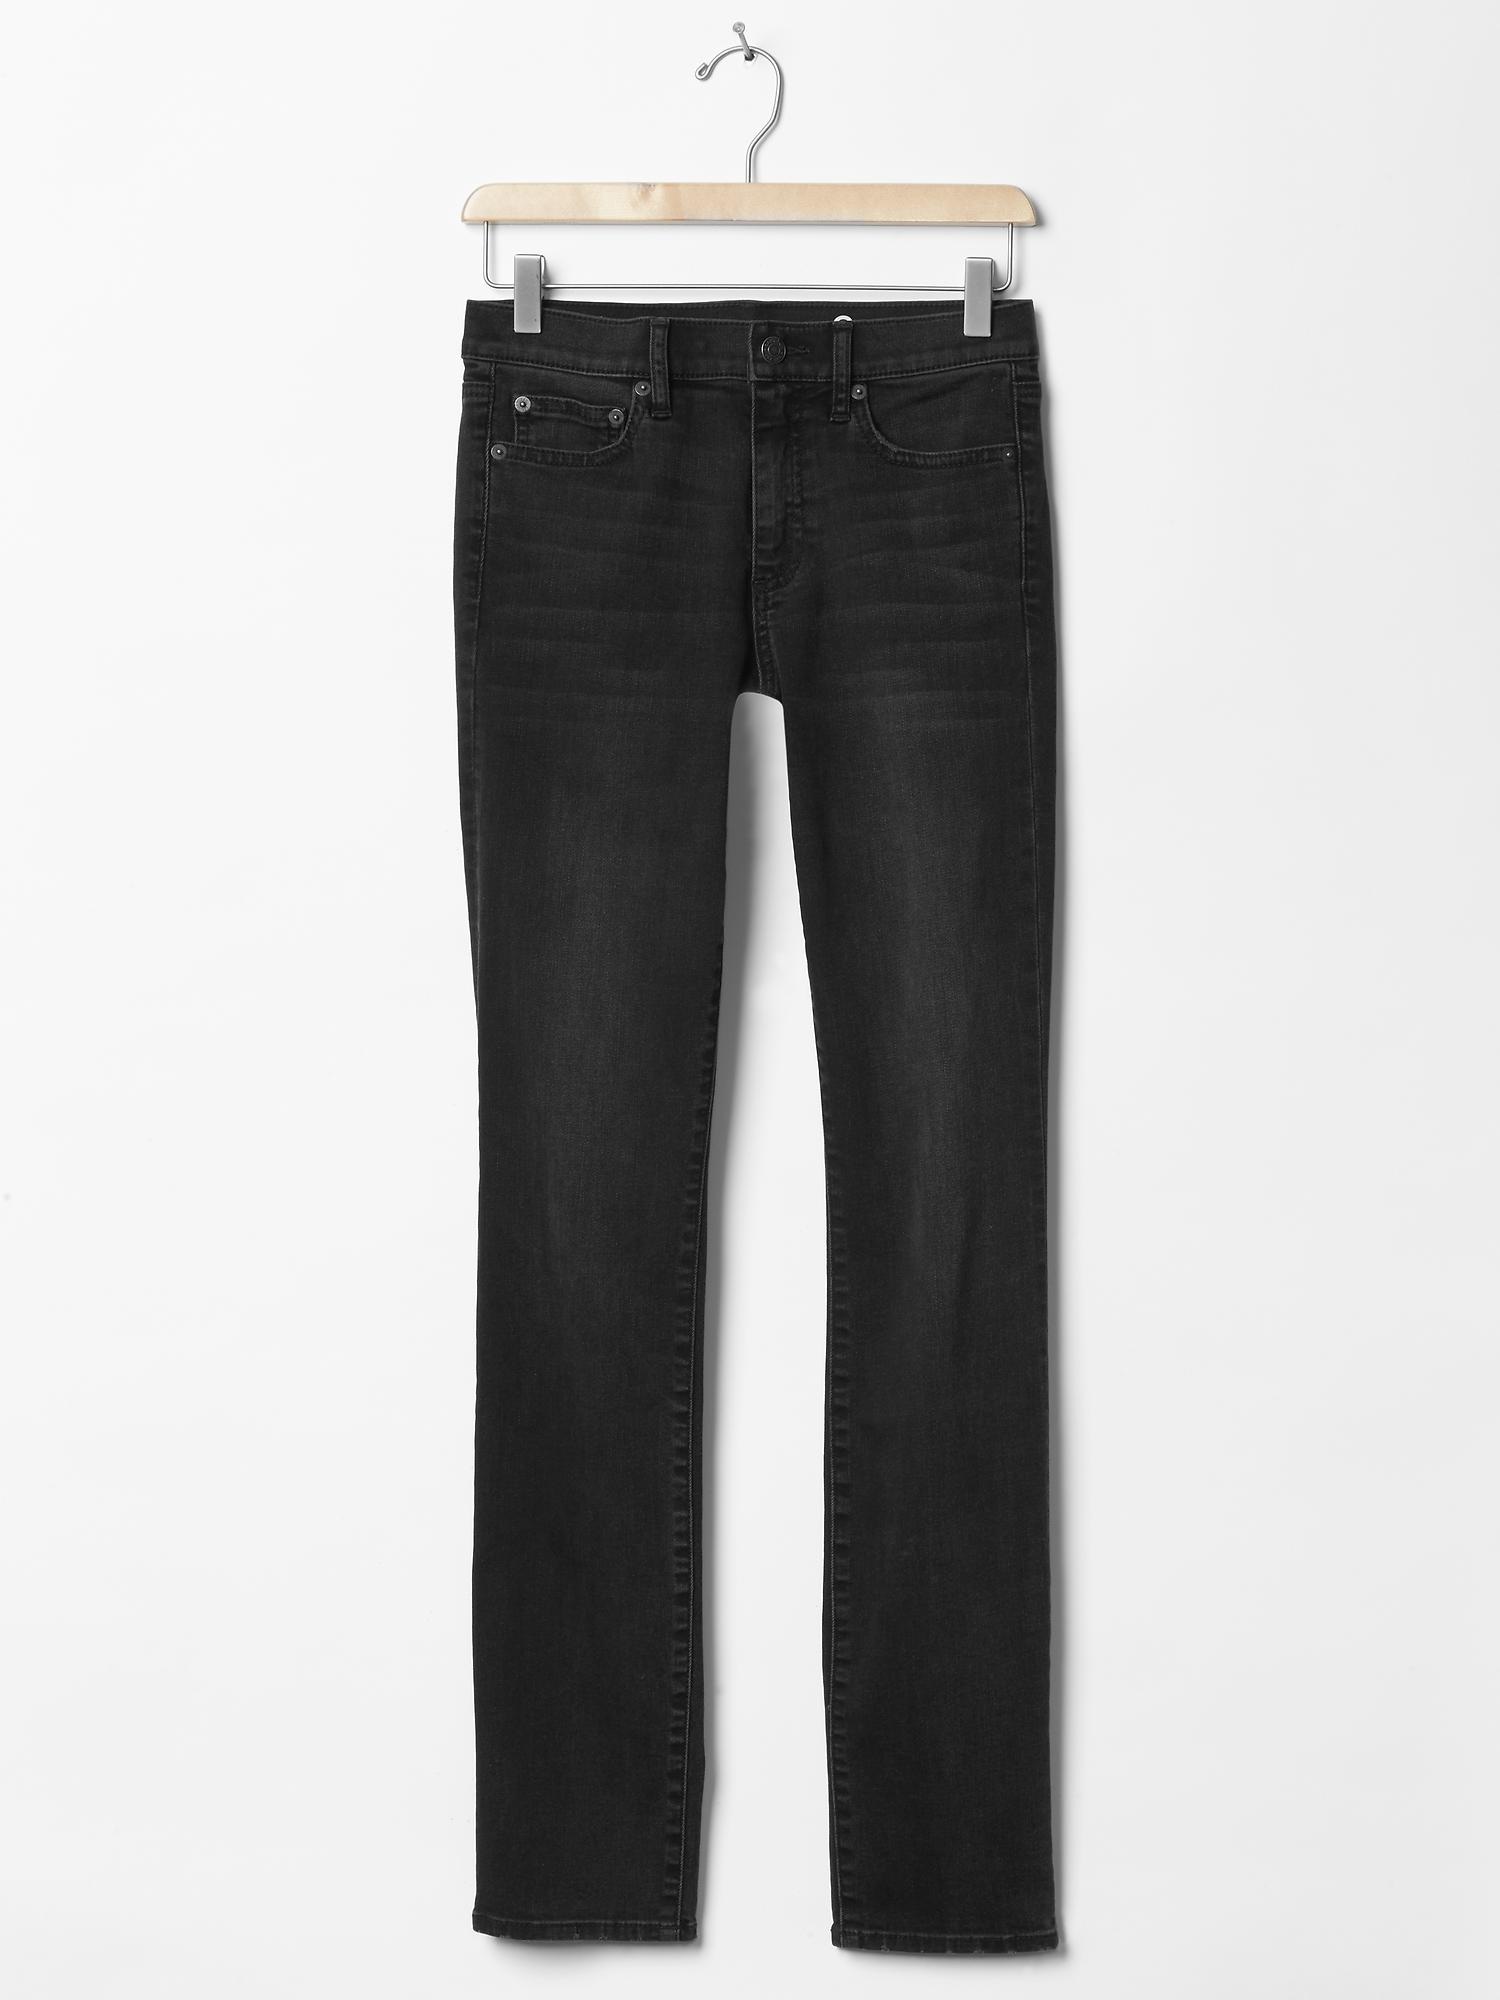 GAP 1969 Soft Wear Slim Stretch Dark Denim Green Jeans measured Size 37x31